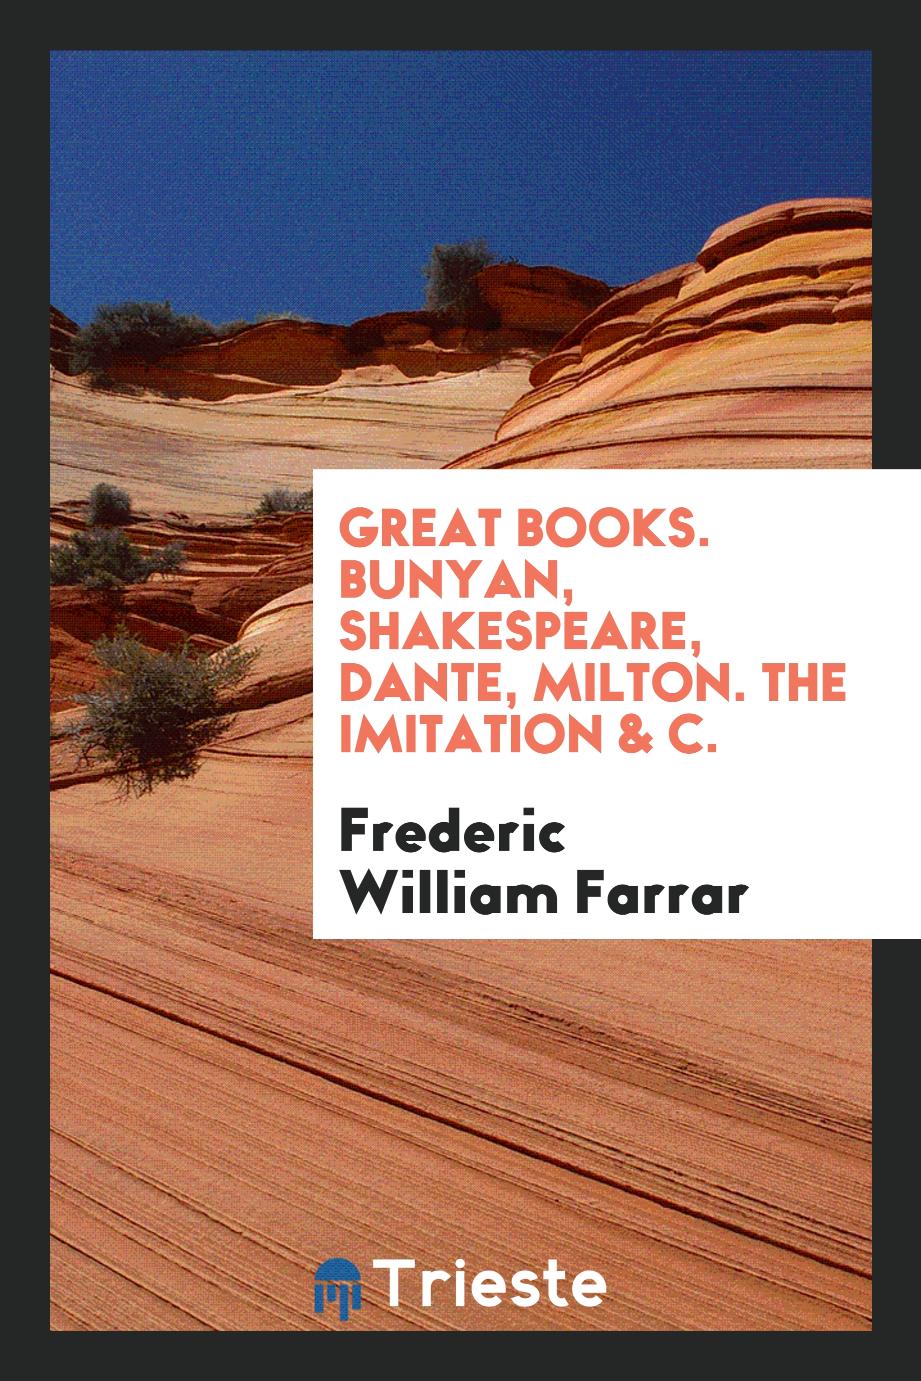 Great Books. Bunyan, Shakespeare, Dante, Milton. The Imitation & c.